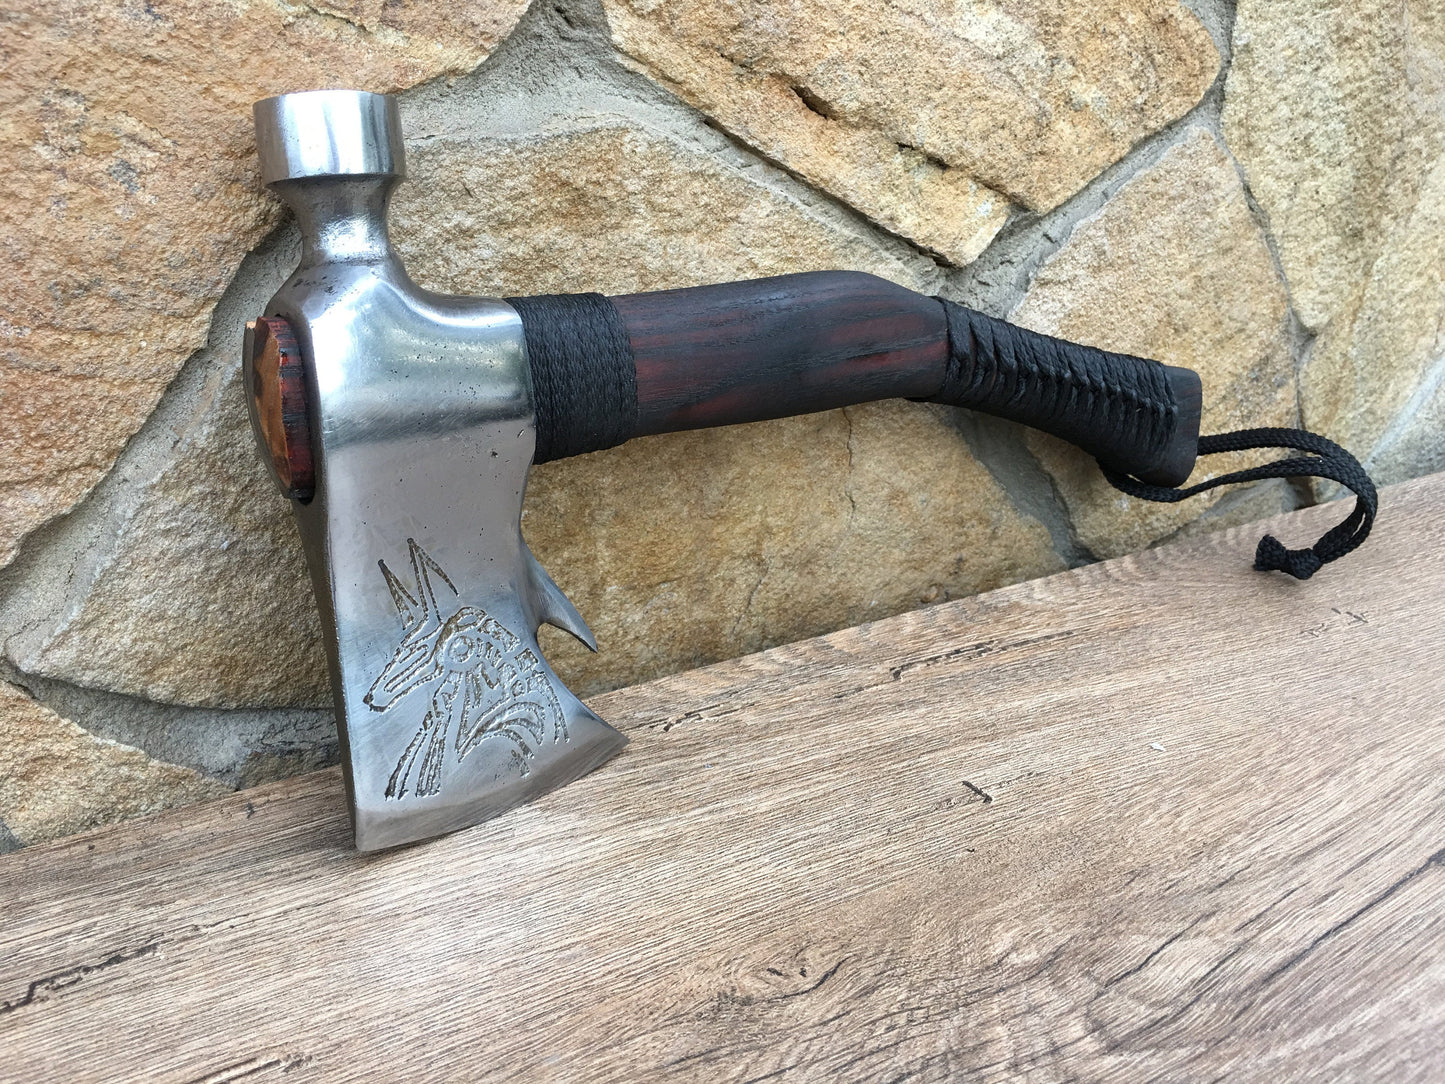 Hatchet, viking axe, tomahawk, 6th anniversary, 11th anniversary, iron anniversary,viking camp kit,viking gifts,iron gifts,steel anniversary